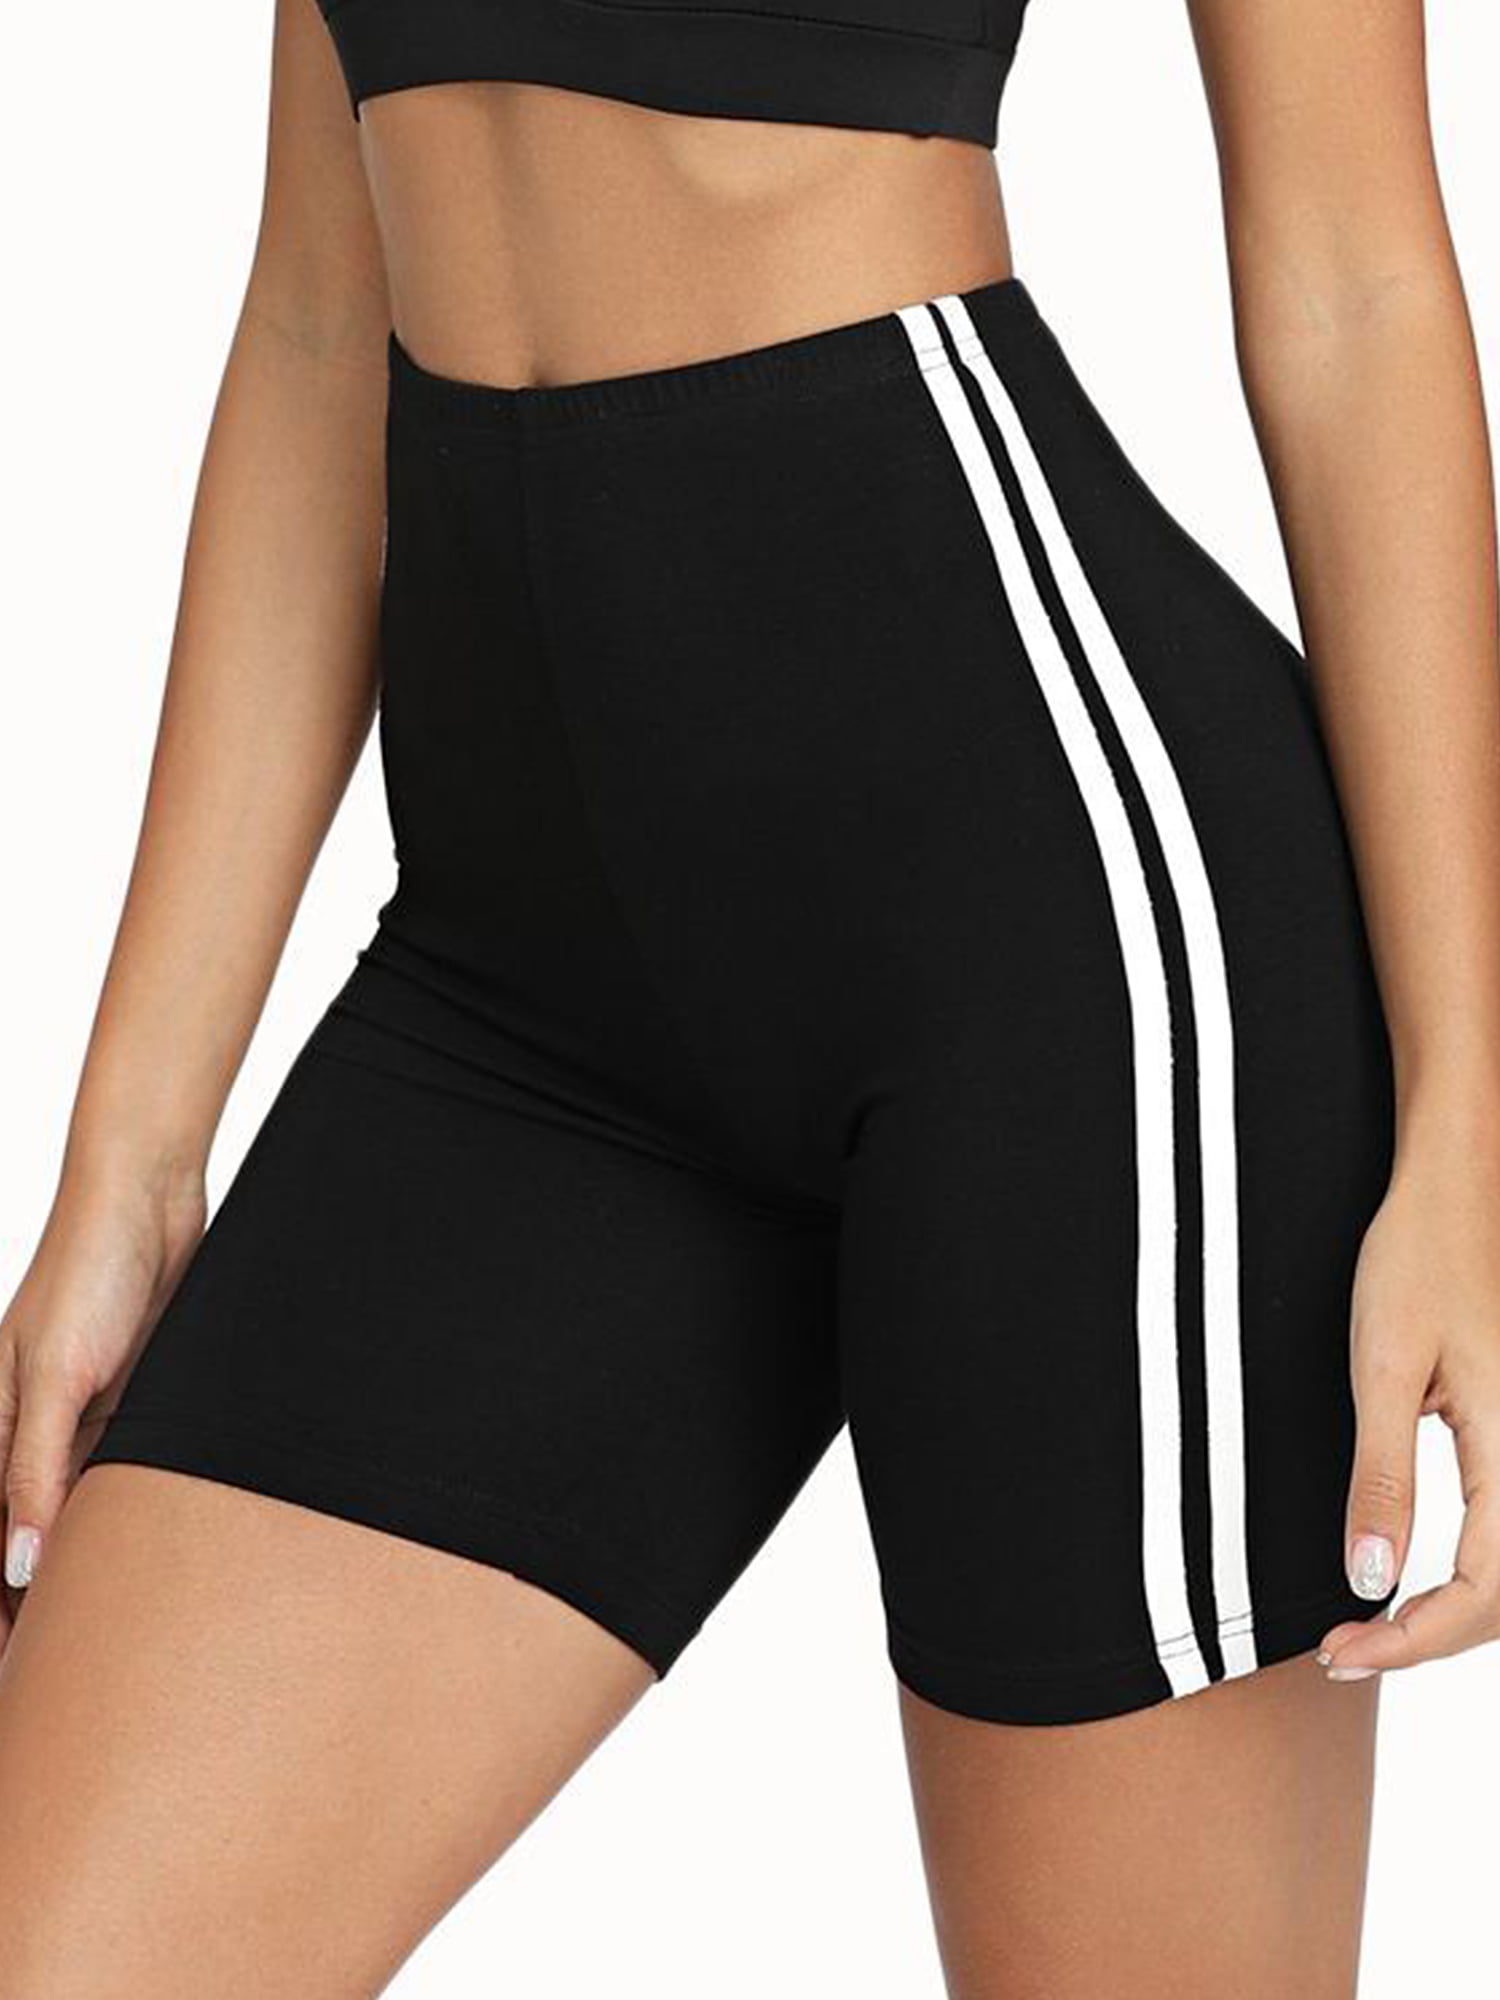 NOVA ACTIVE Women’s Workout Running Shorts High Waist Tummy Control Athletic Gym Yoga Lounge Shorts